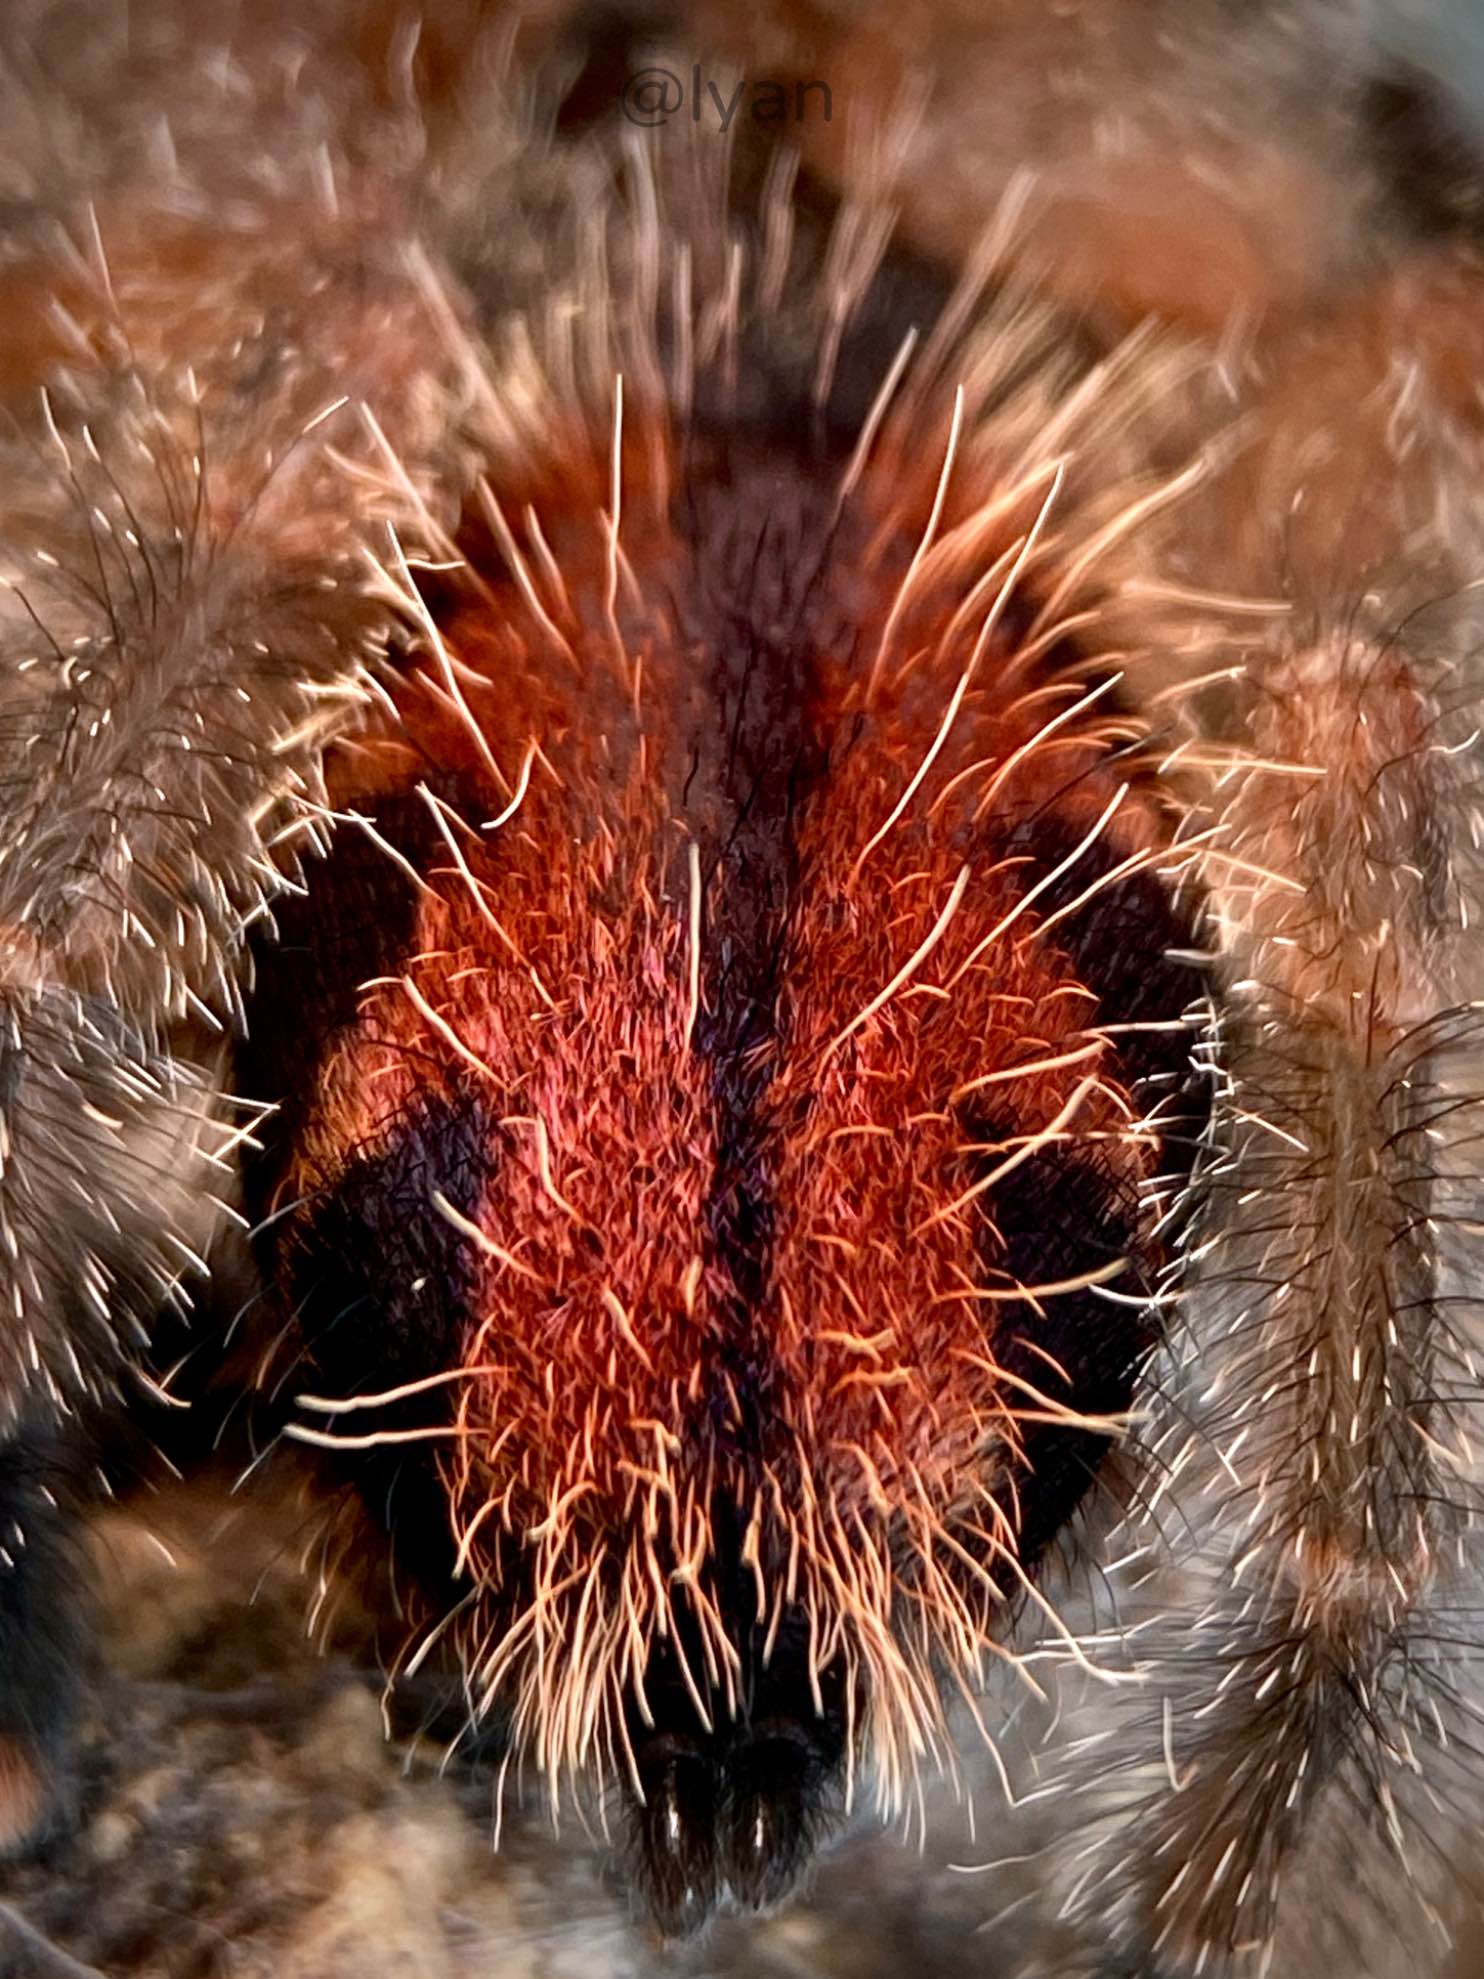 Lyan蜘蛛摄影记—玛格丽塔岛粉趾幼体